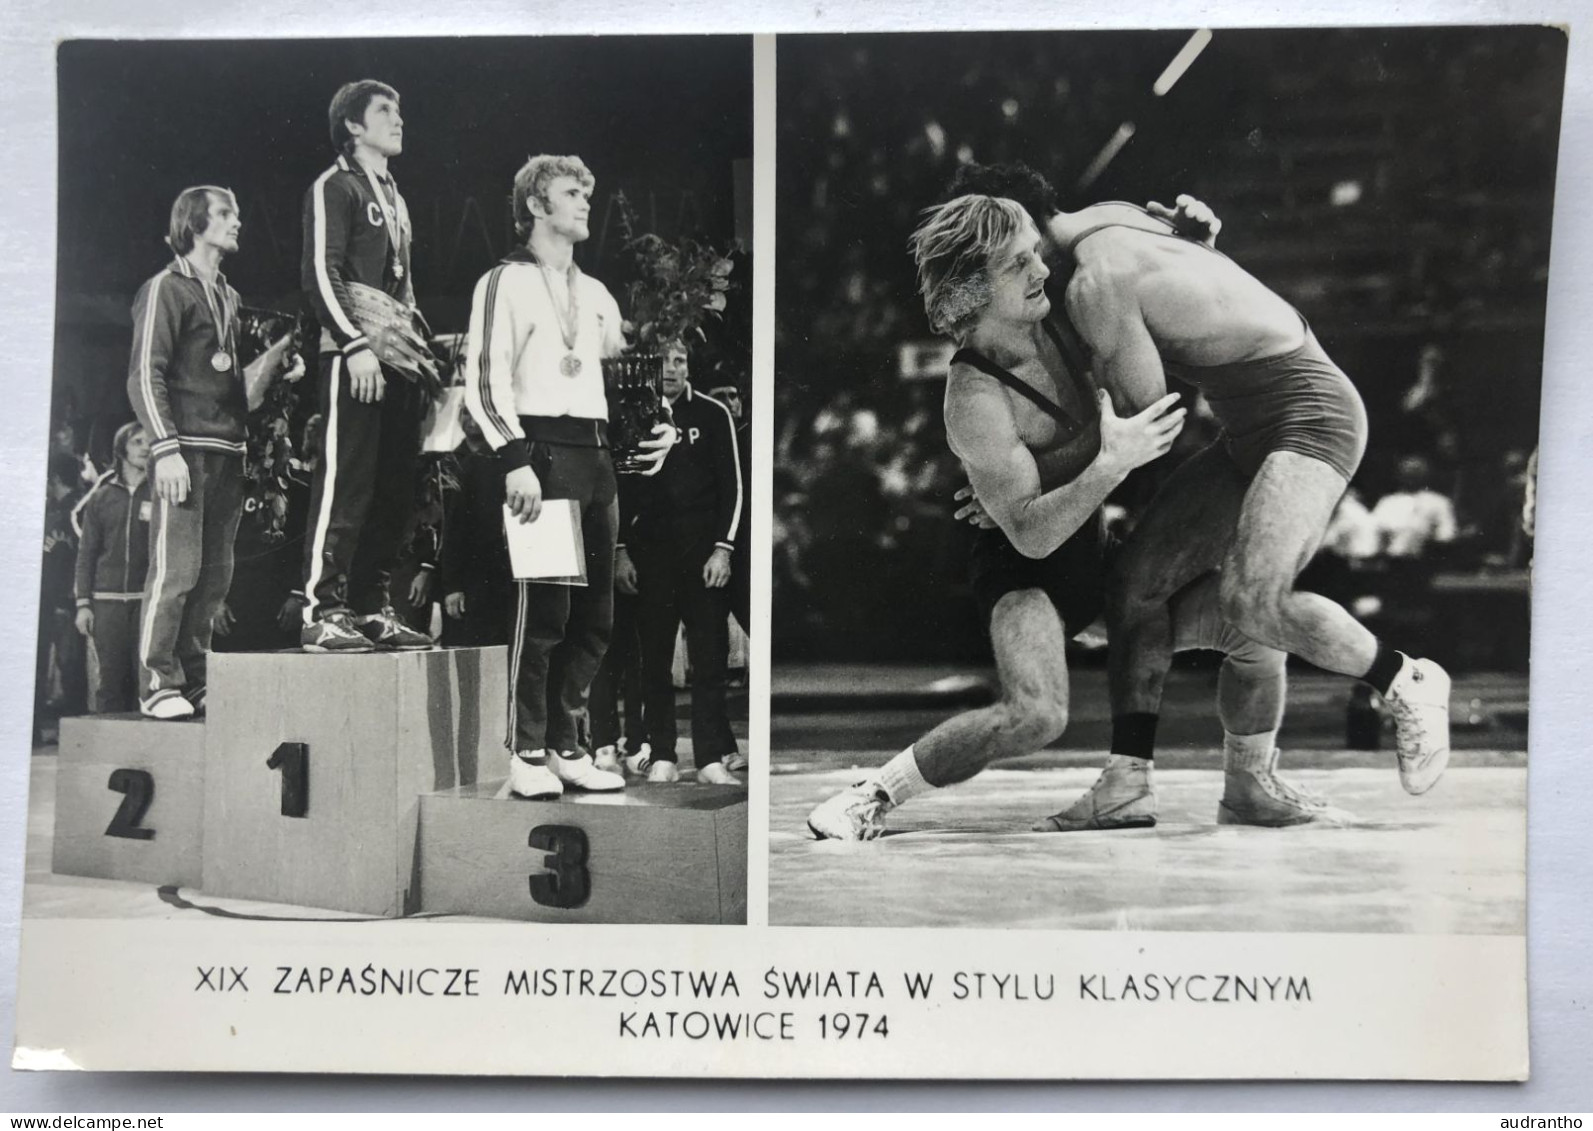 Carte Postale Józef Lipień - Médaillé En Lutte Gréco-romaine - Katowice 1974 - Lutte